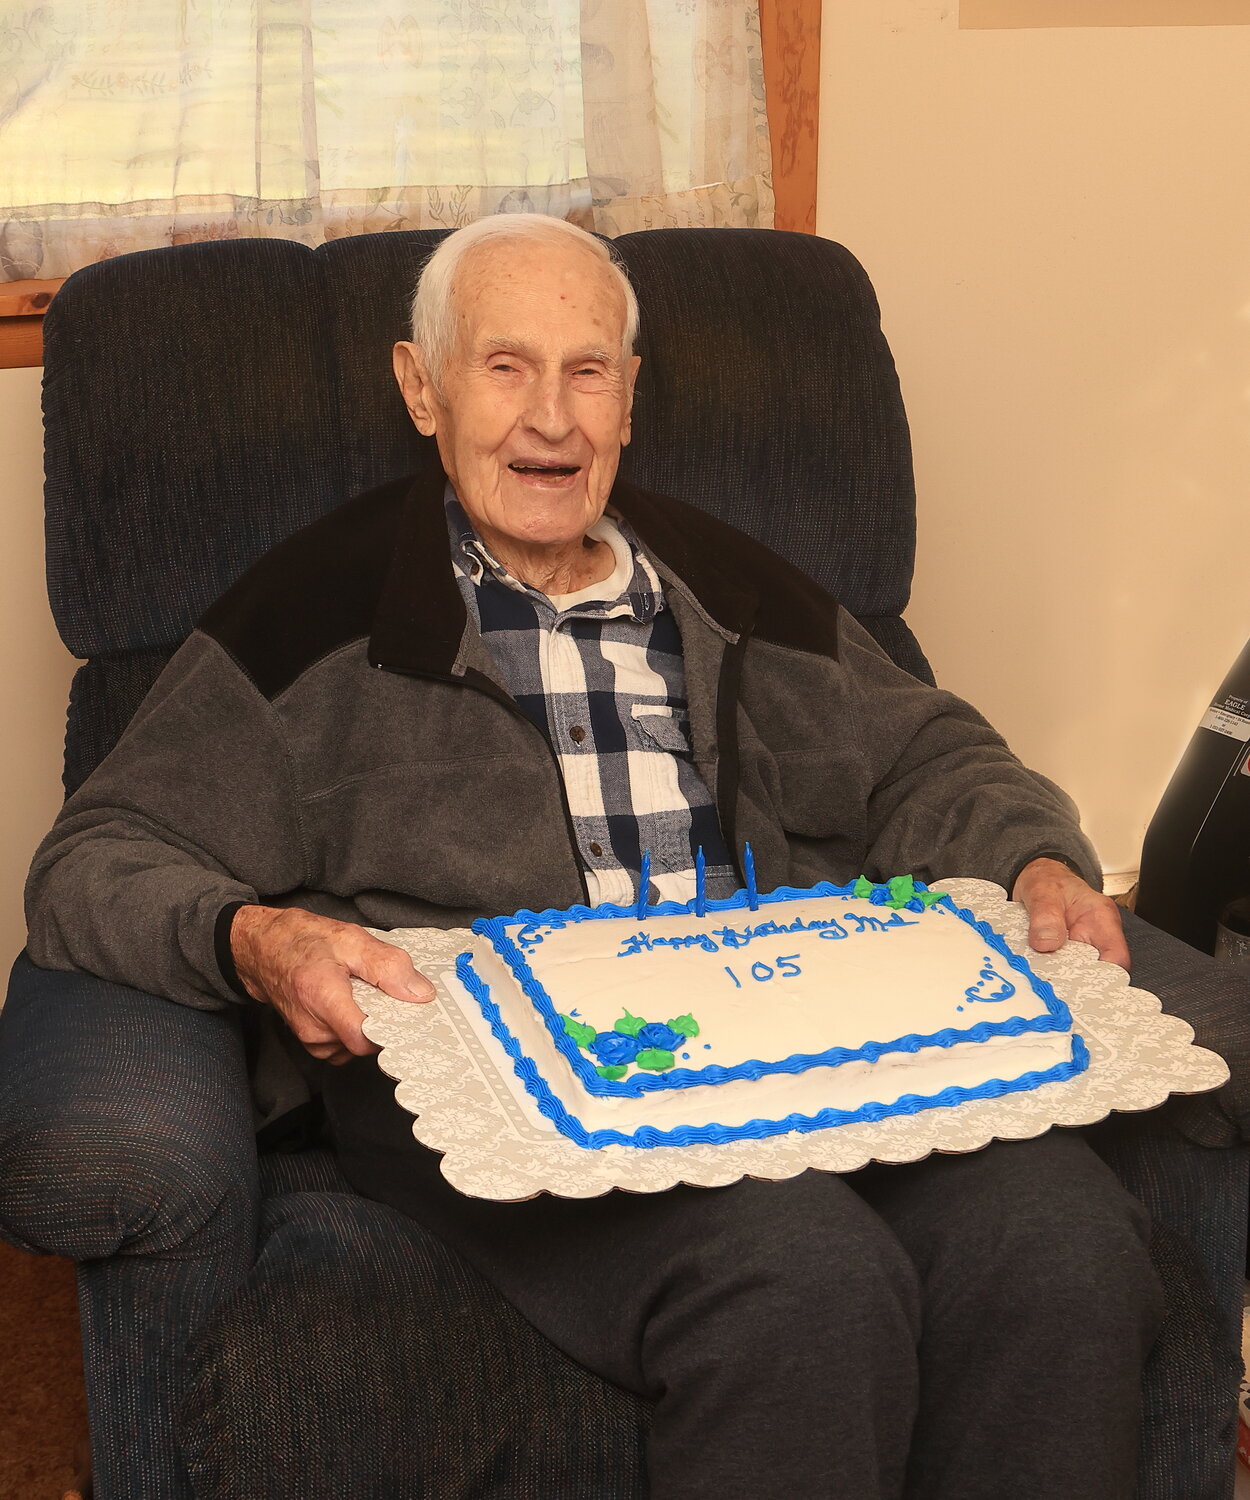 Mel Baker celebrates turning 105 with cake at Smith Hill Methodist Church.